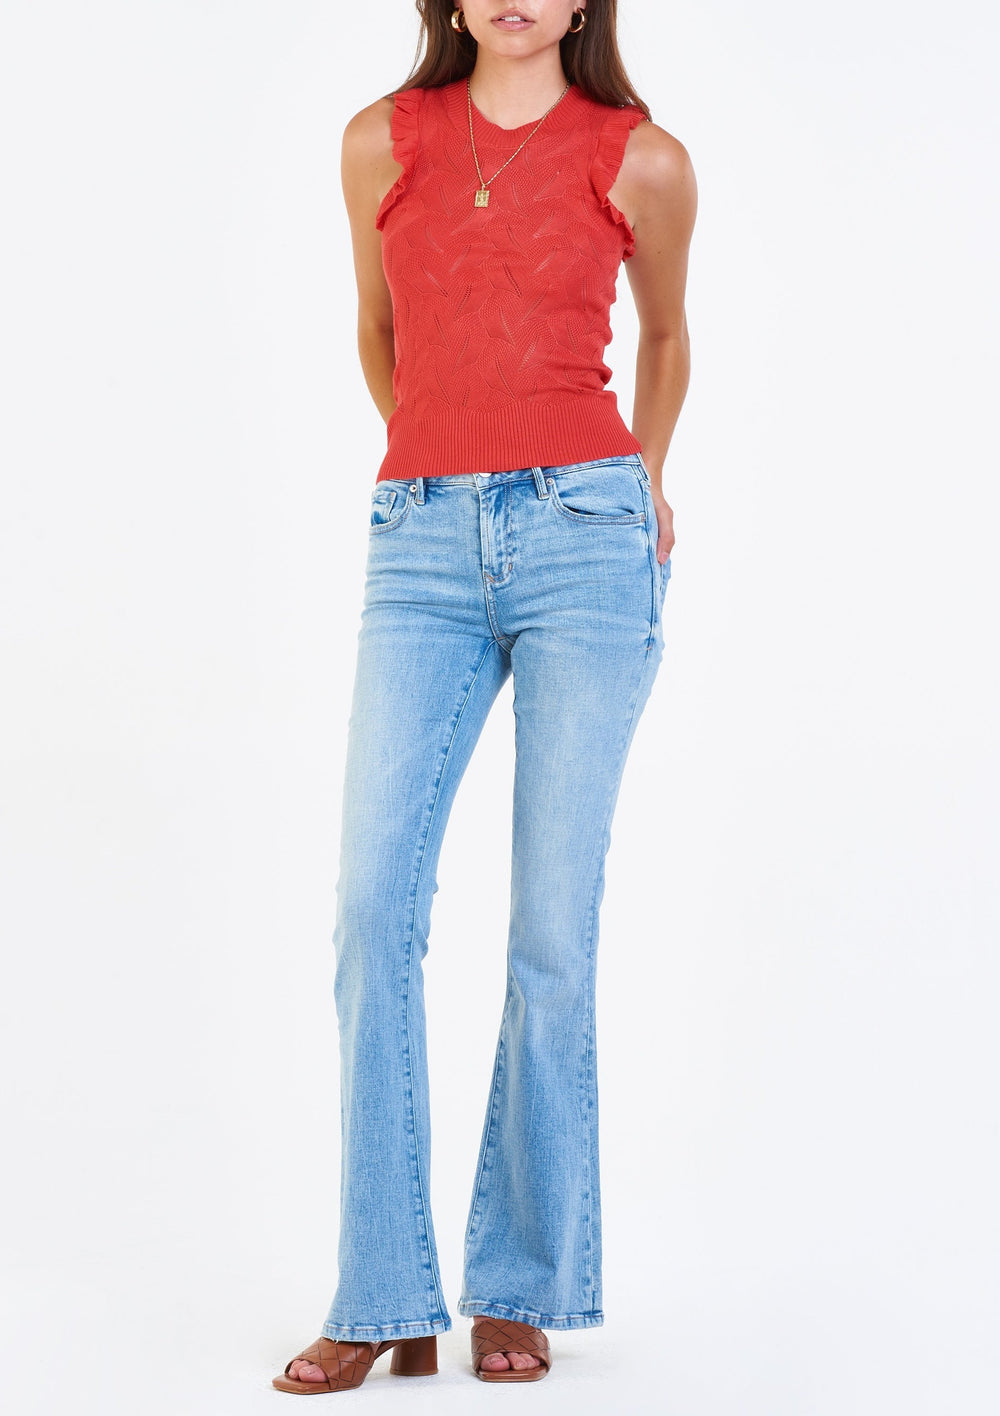 image of a female model wearing a BETTY CREW TANK TOP RED ROSA DEAR JOHN DENIM 